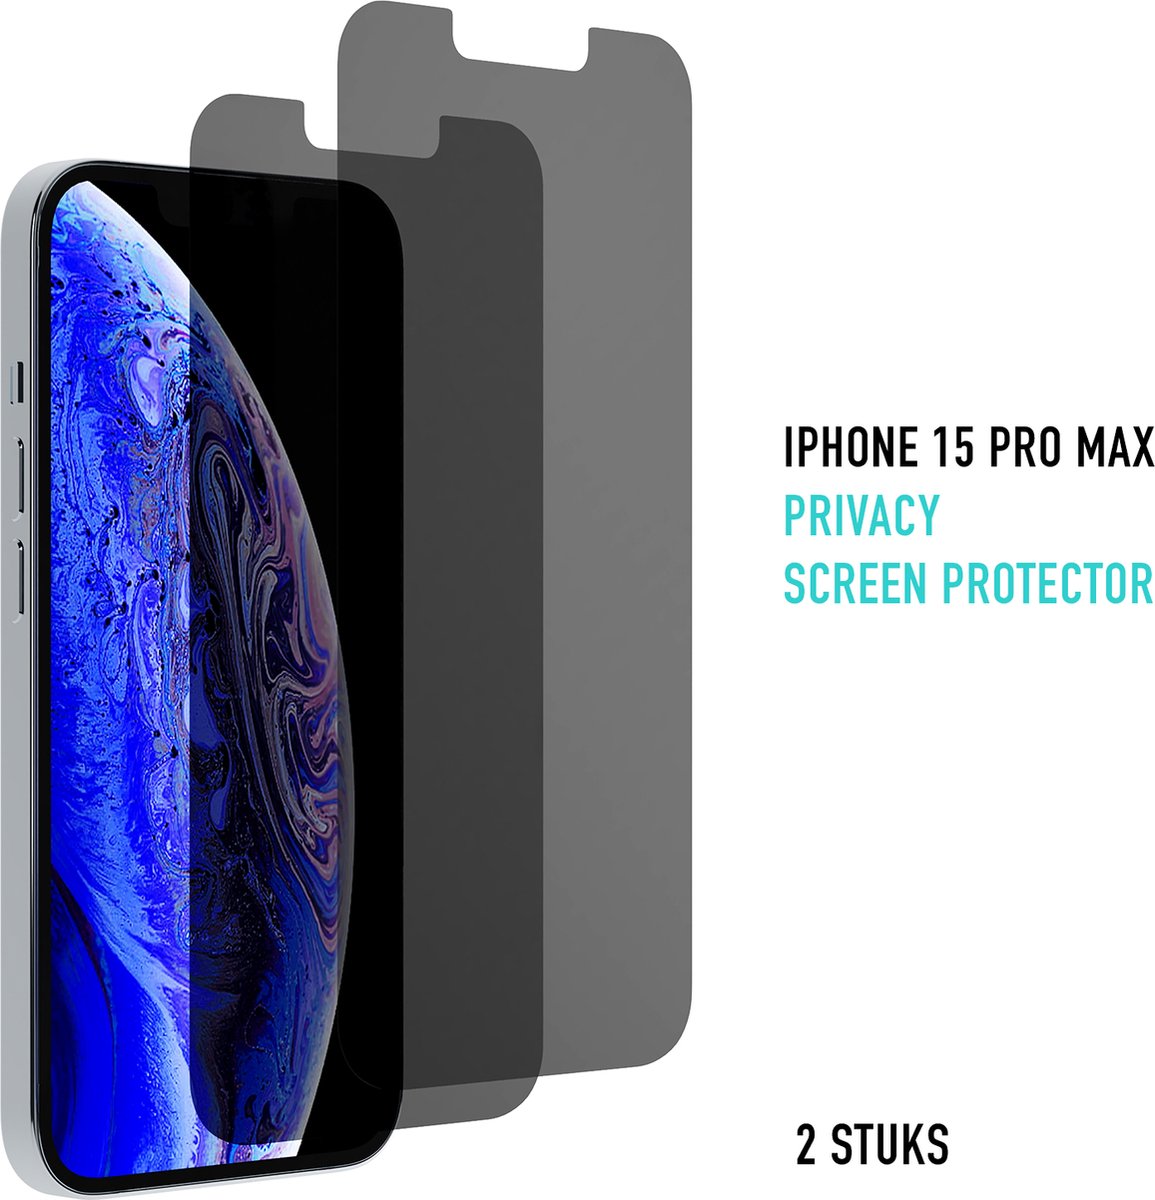 Spy-fy Privacy Screenprotector iPhone 15 Pro Max met Privacy Filter | Two-pack privacy screens | Met installatiekit | Privacy Screen voor iPhone | Brievenbus geleverd